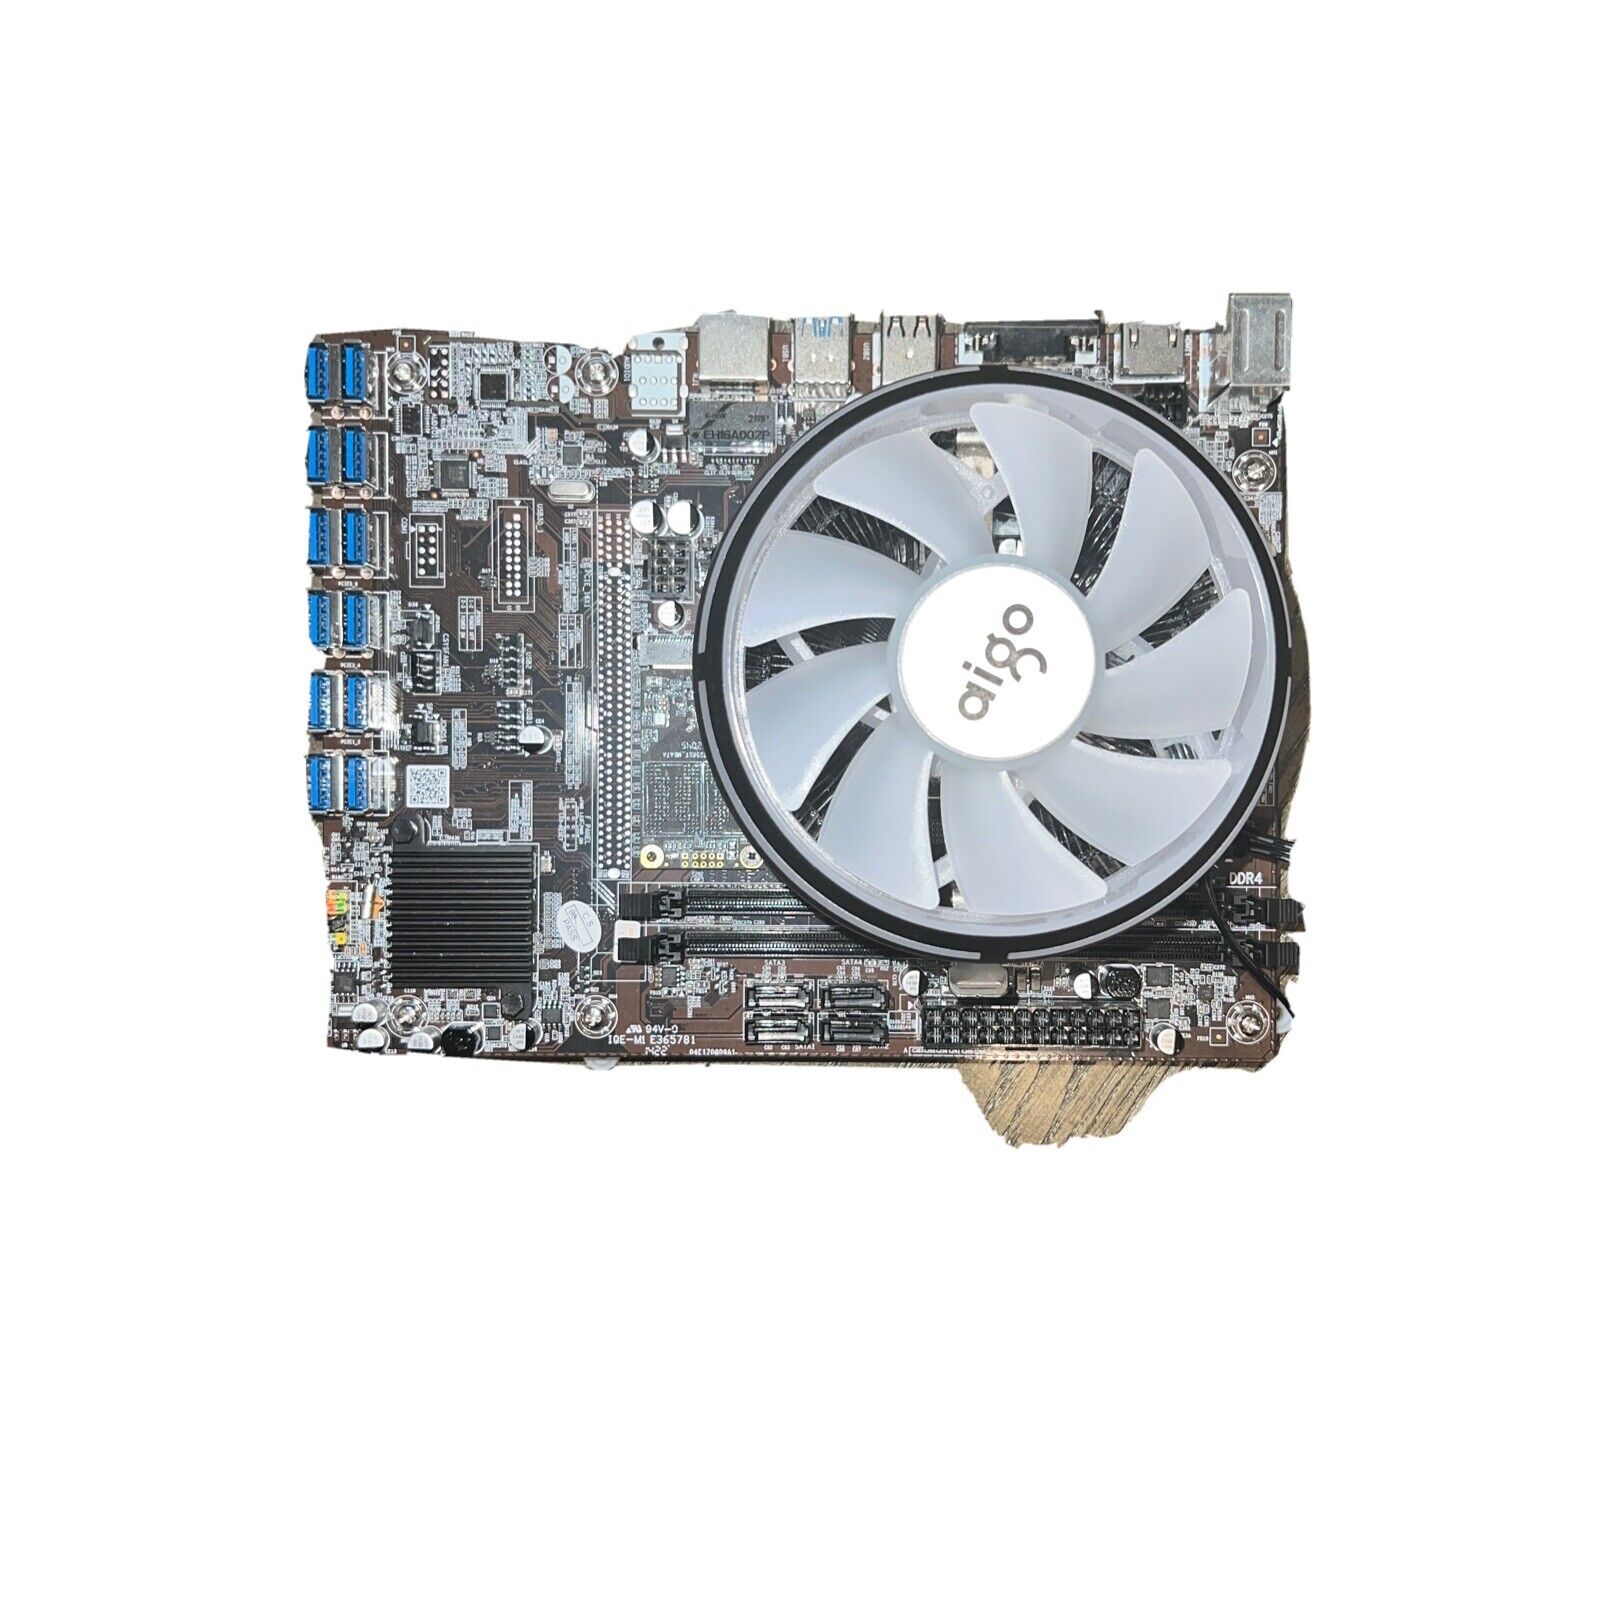 B250C BTC Mining Motherboard 12XPCIE  to USB3.0 Graphics Card Slot W/ SSD, CPU